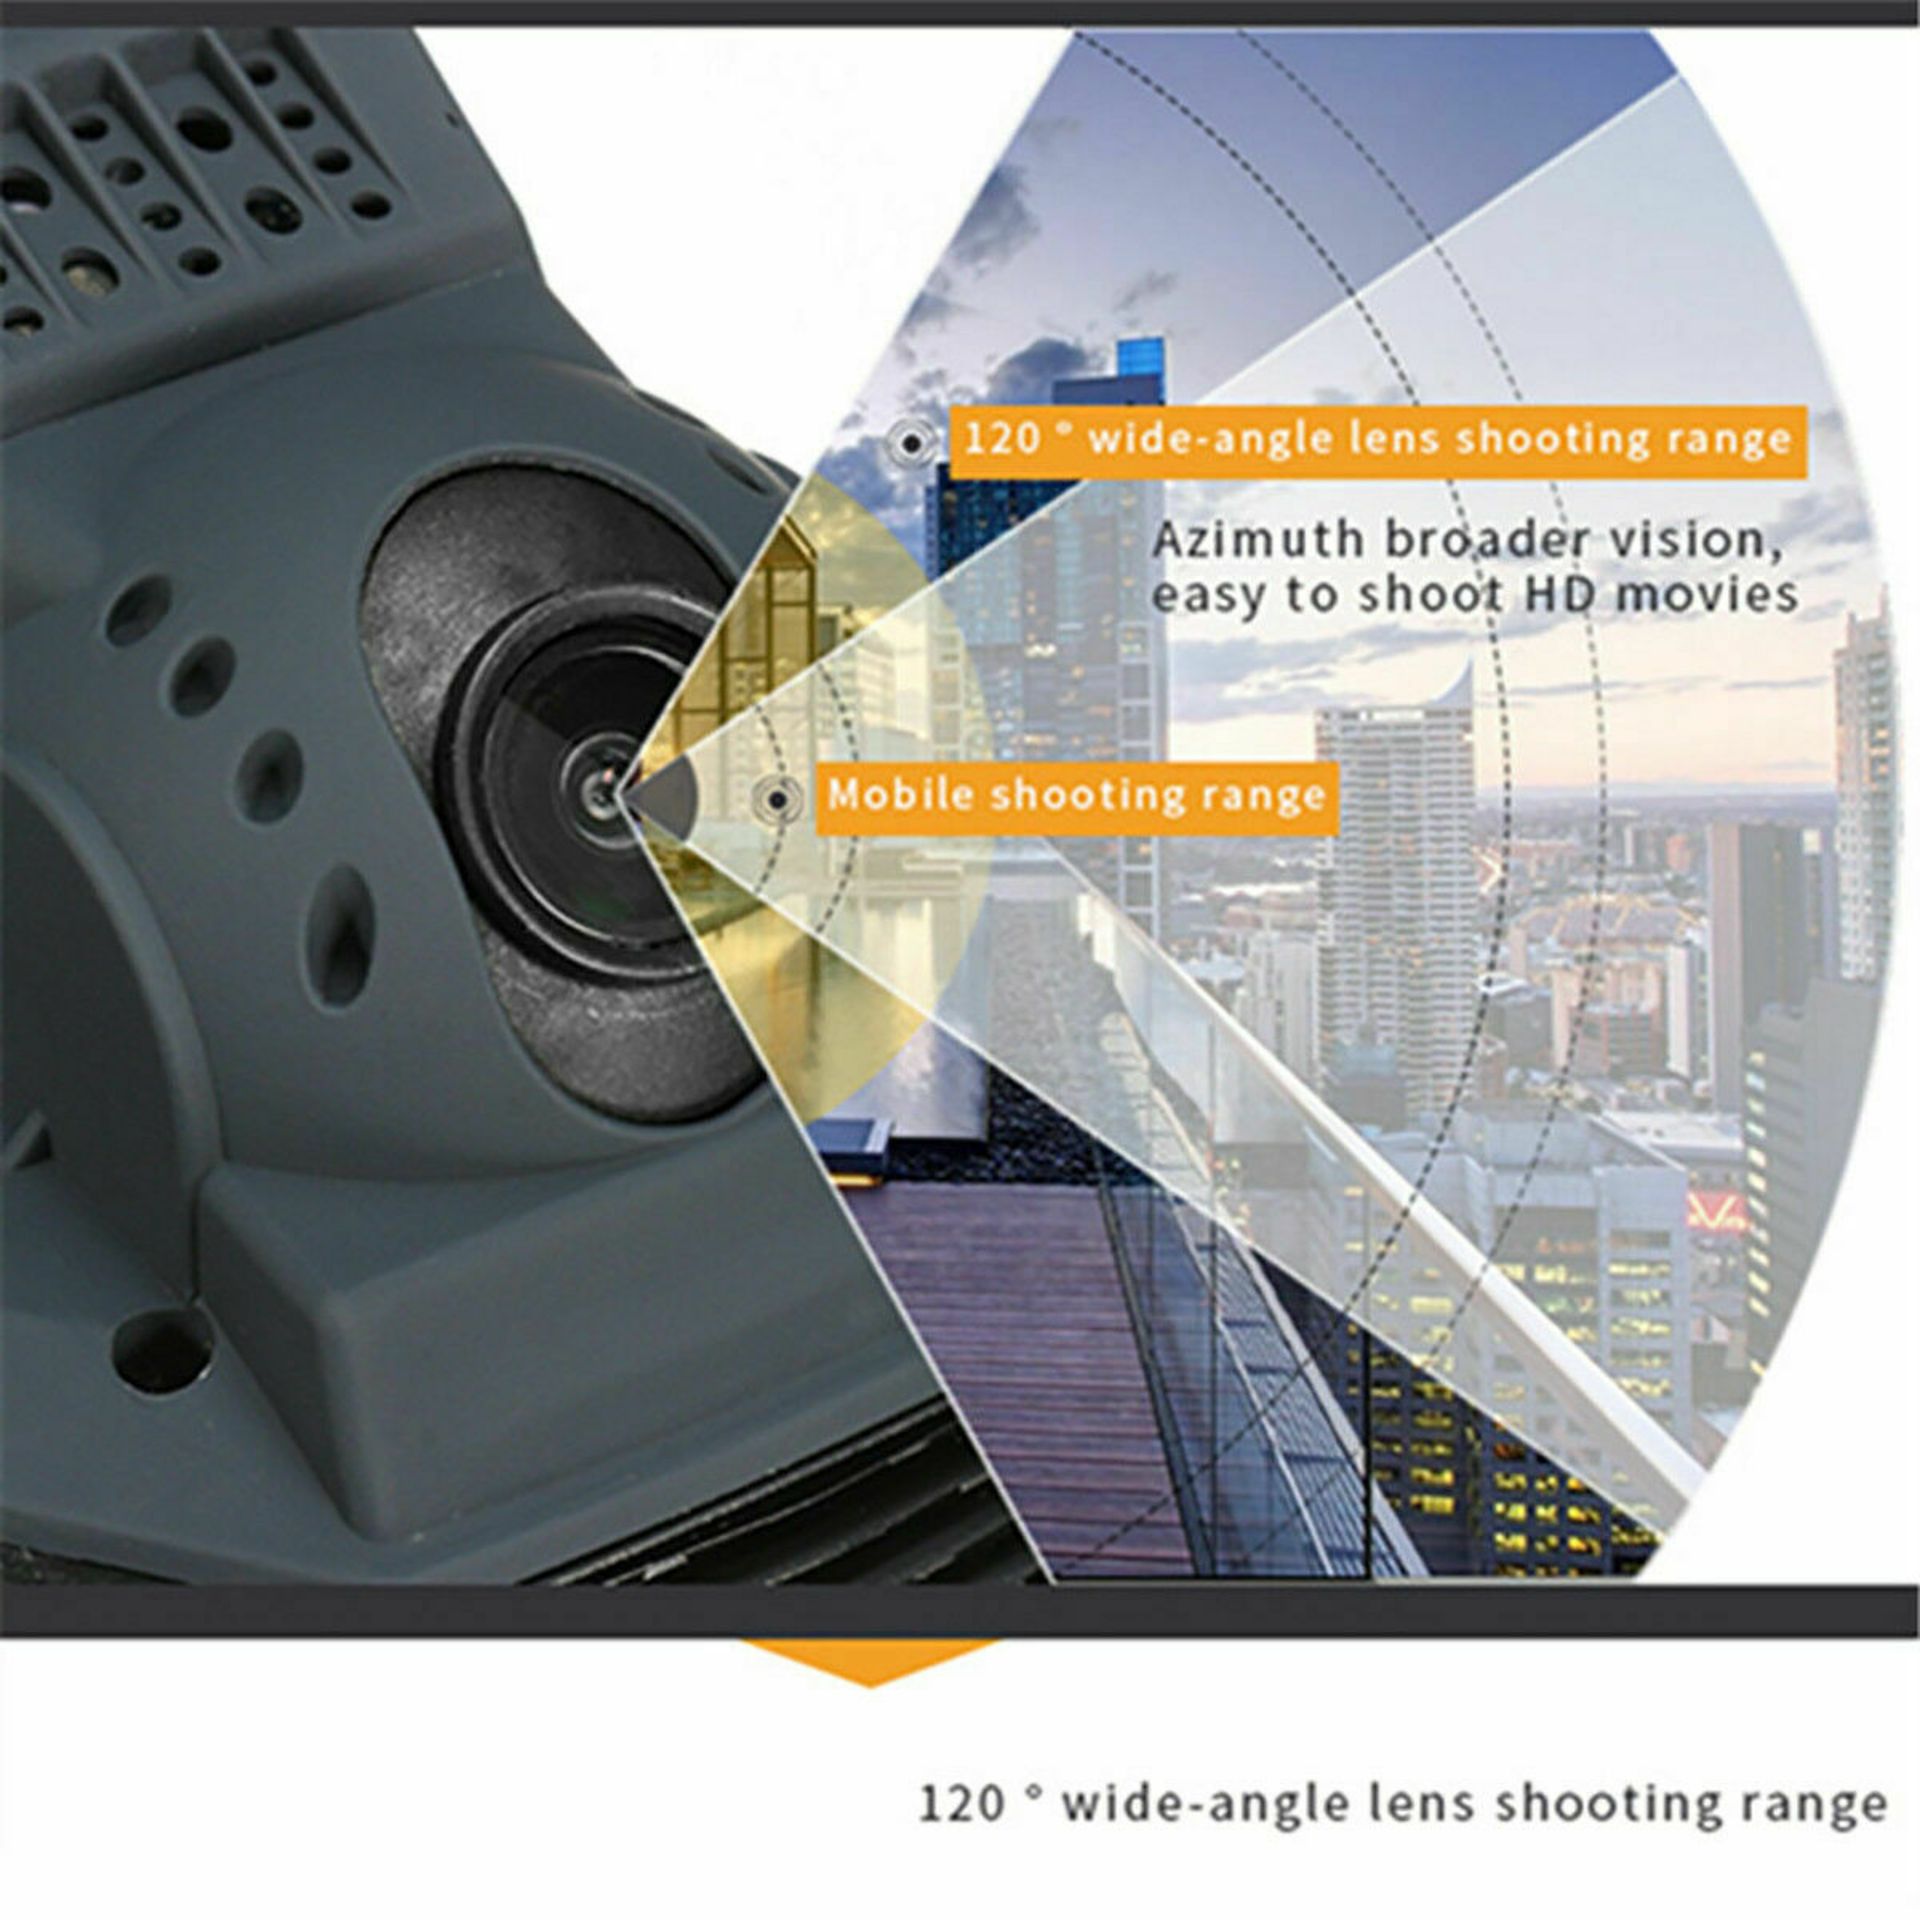 NEW & UNUSED DRONE X PRO WIFI FPV 1080P HD CAMERA FOLDABLE RC QUADCOPTER + BAG *PLUS VAT* - Image 7 of 12